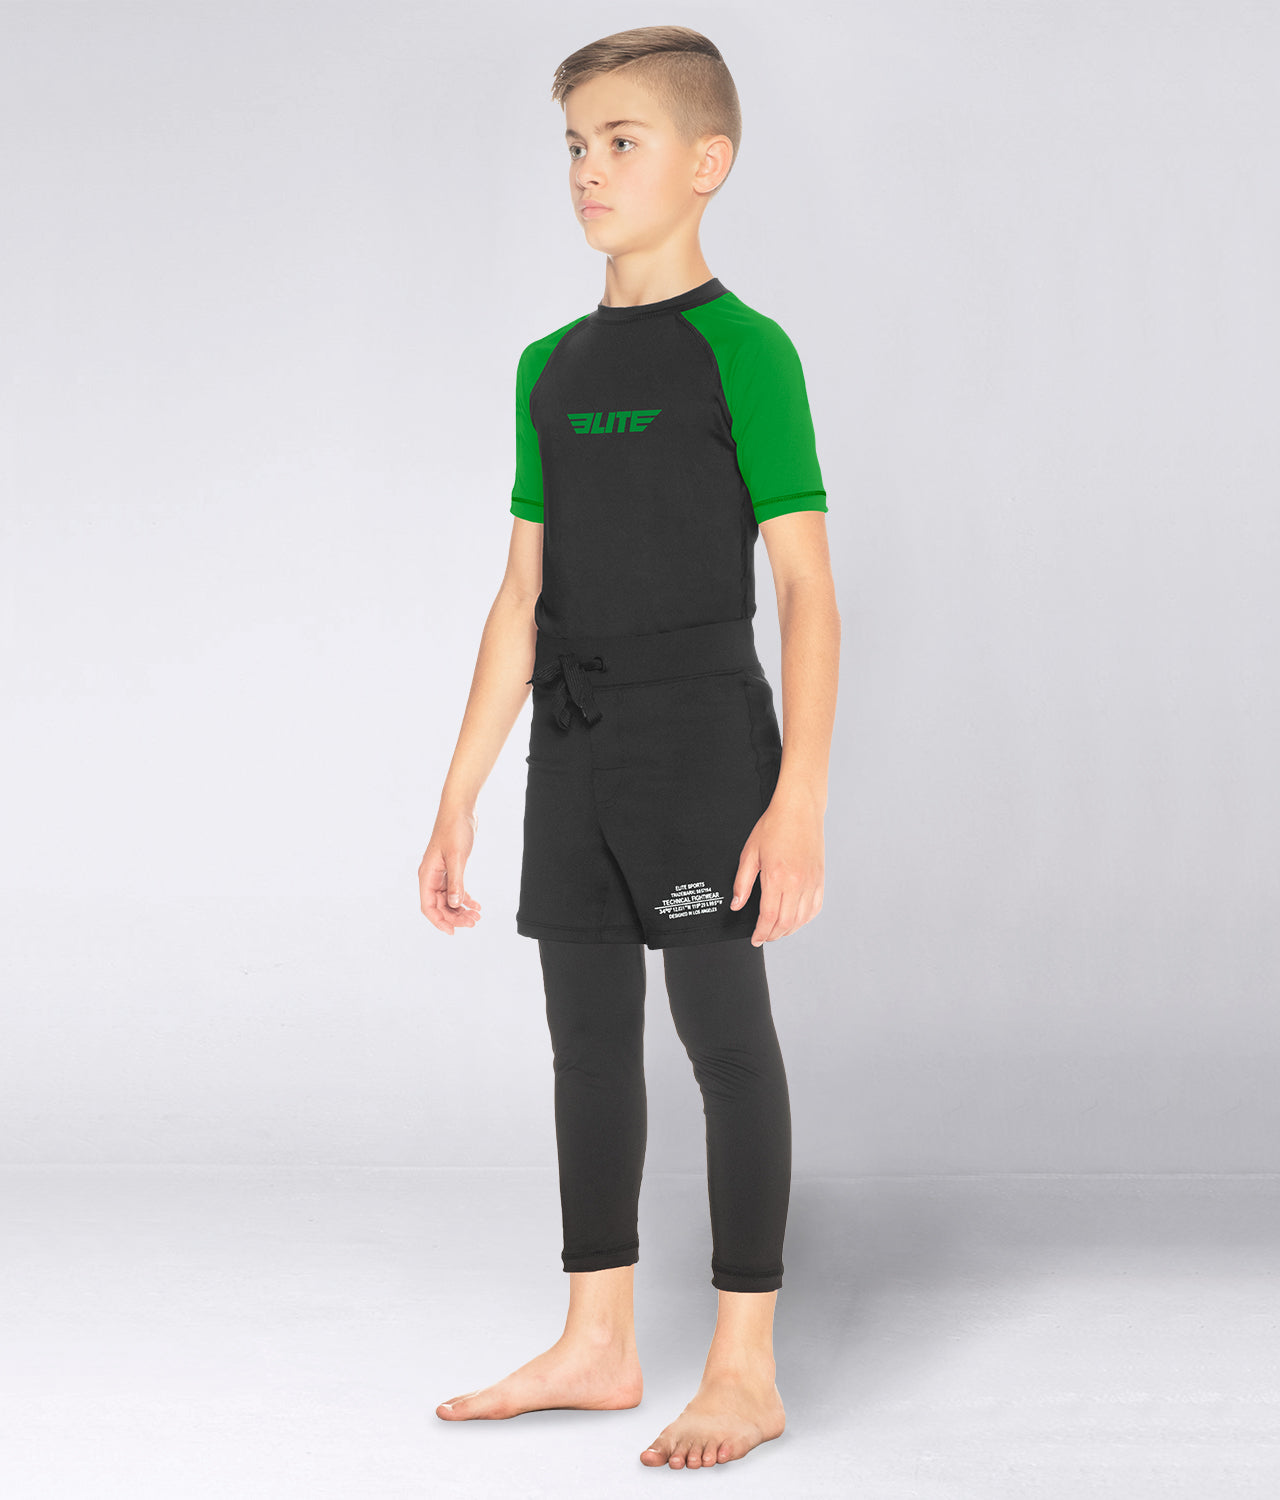 Elite Sports Kids' Standard Green Short Sleeve Wrestling Rash Guard